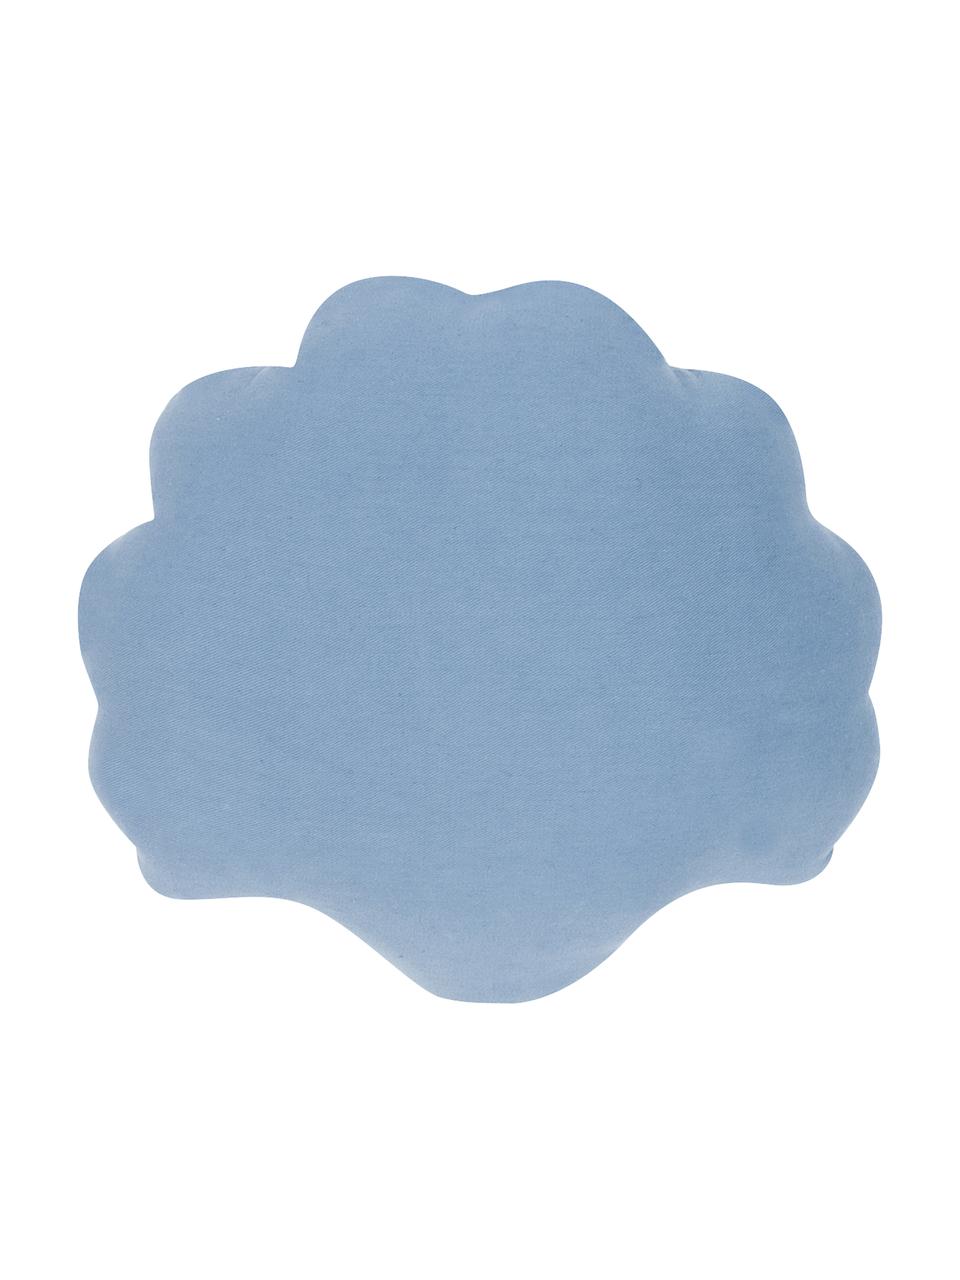 Coussin coquillage velours Shell, Bleu ciel, larg. 32 x long. 27 cm